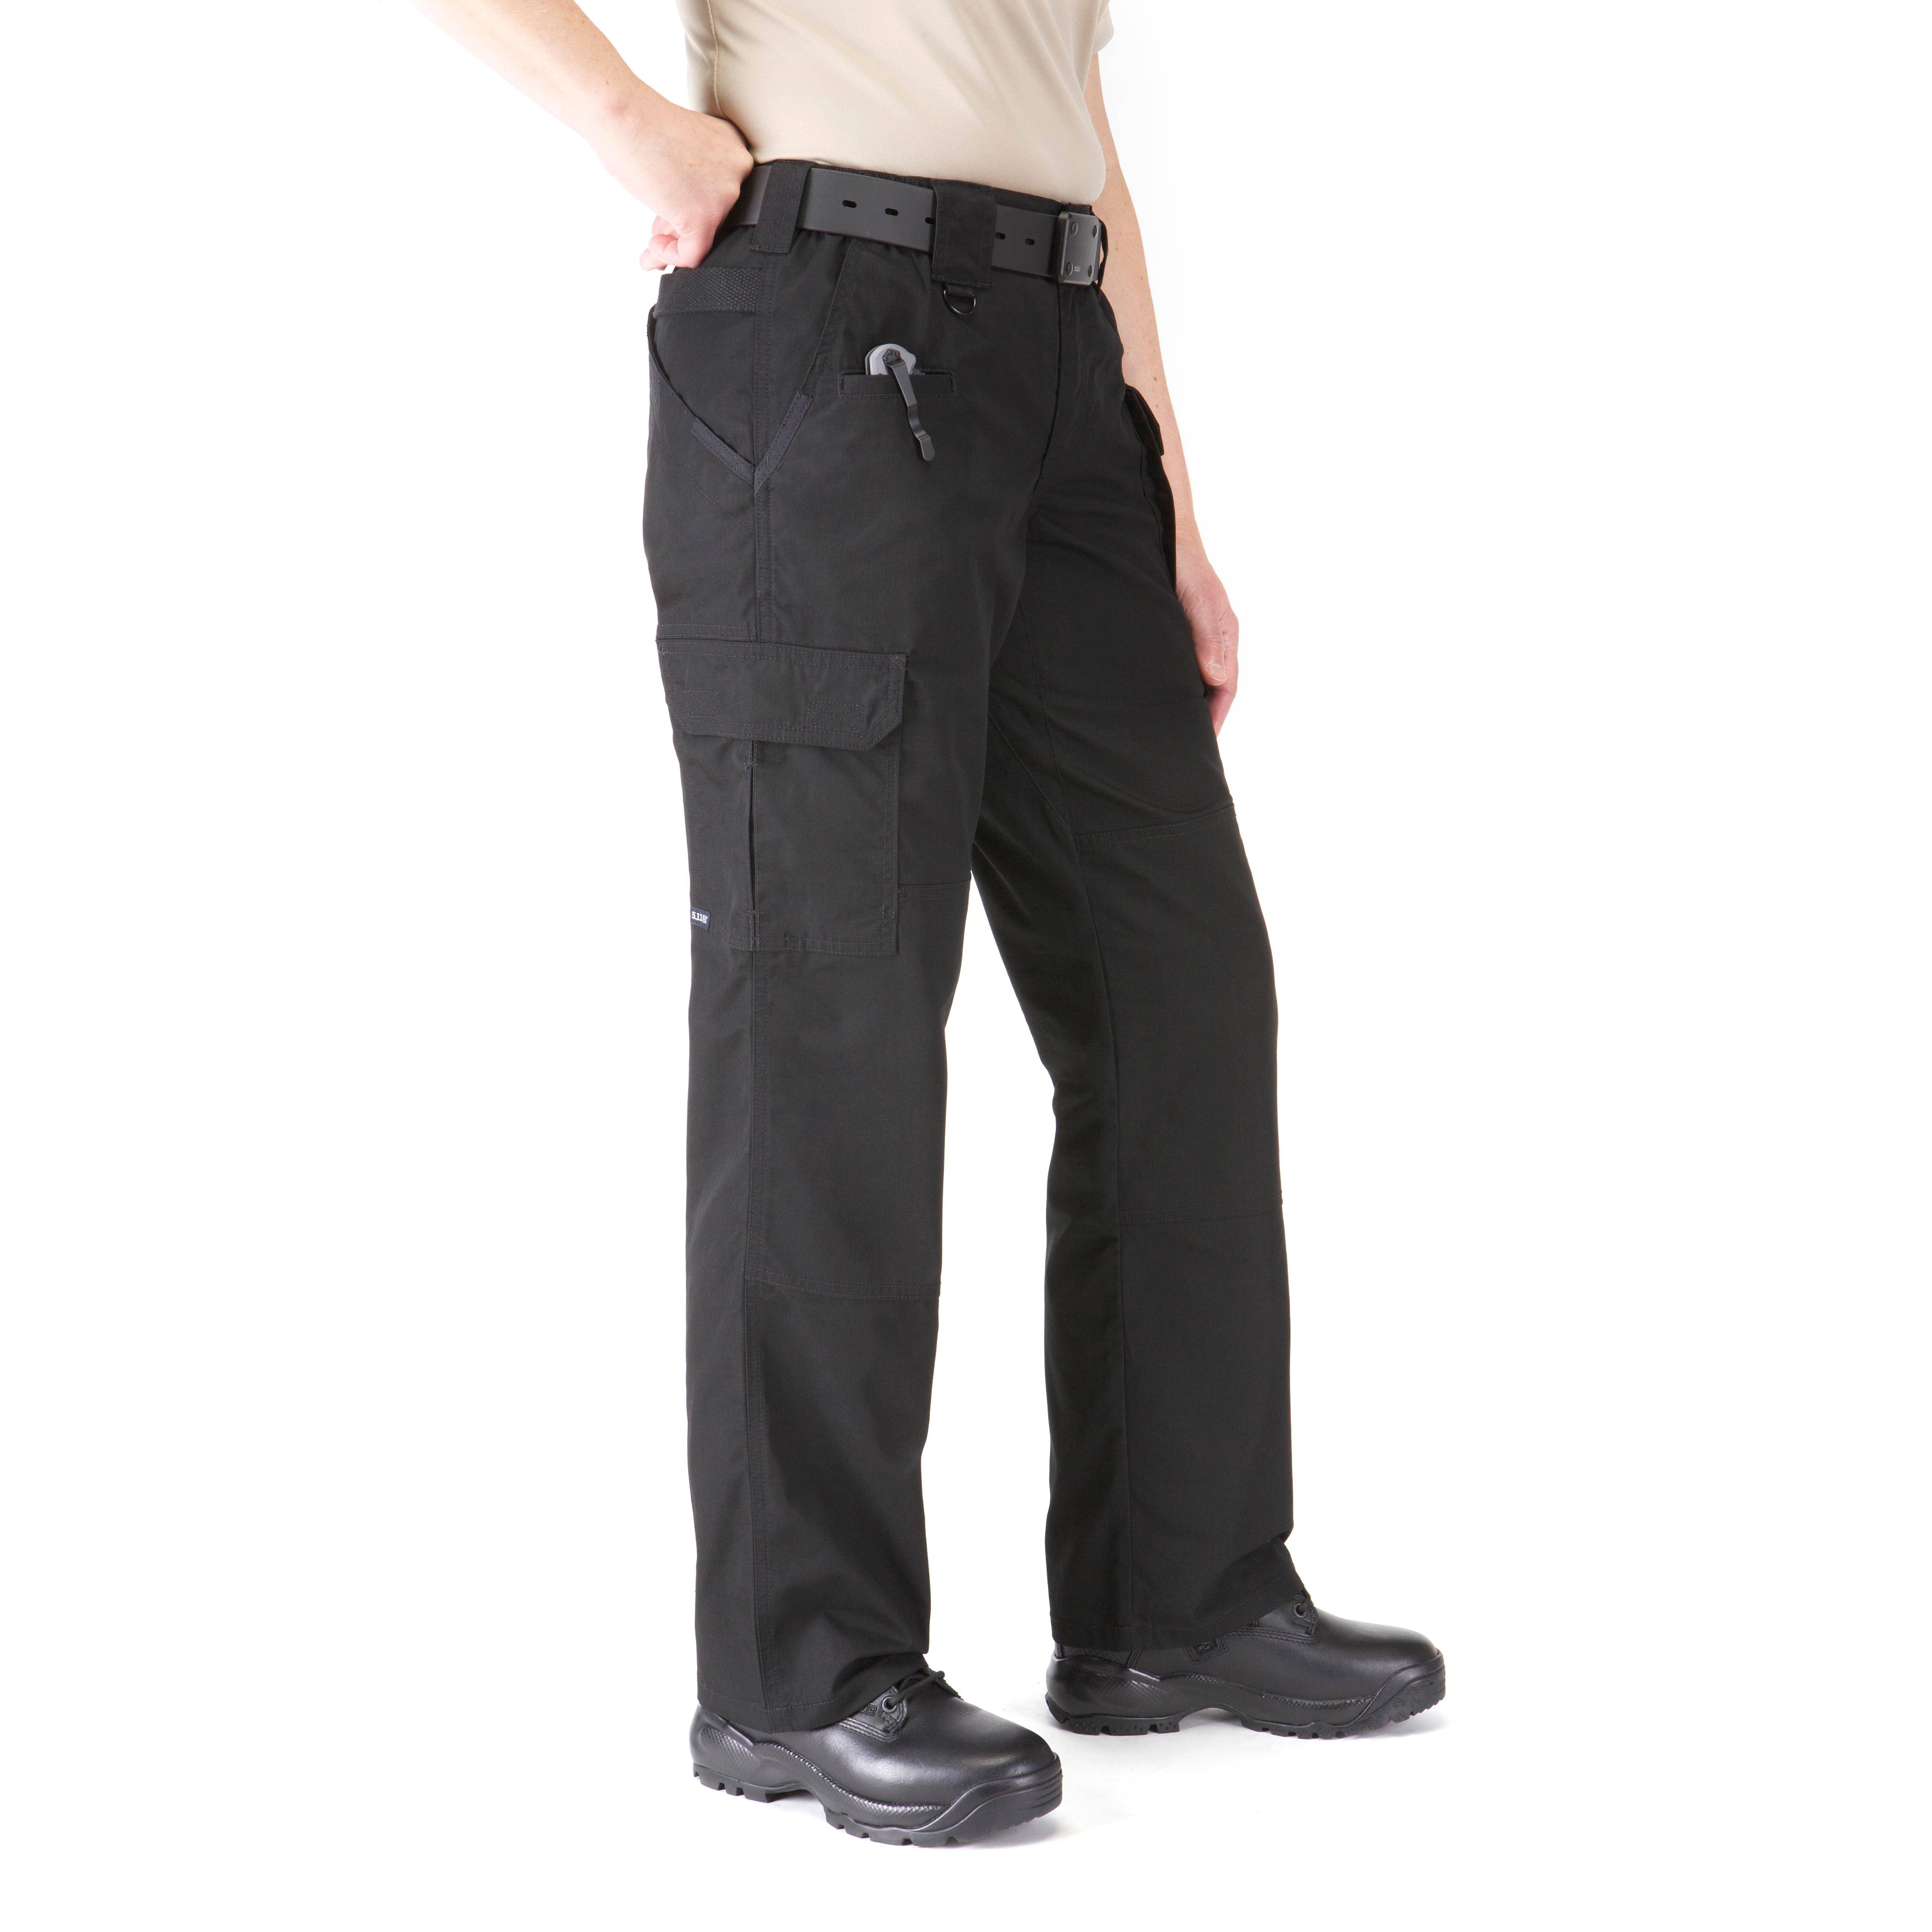 5.11 Tactical Women's Taclite Pro Ripstop Pants